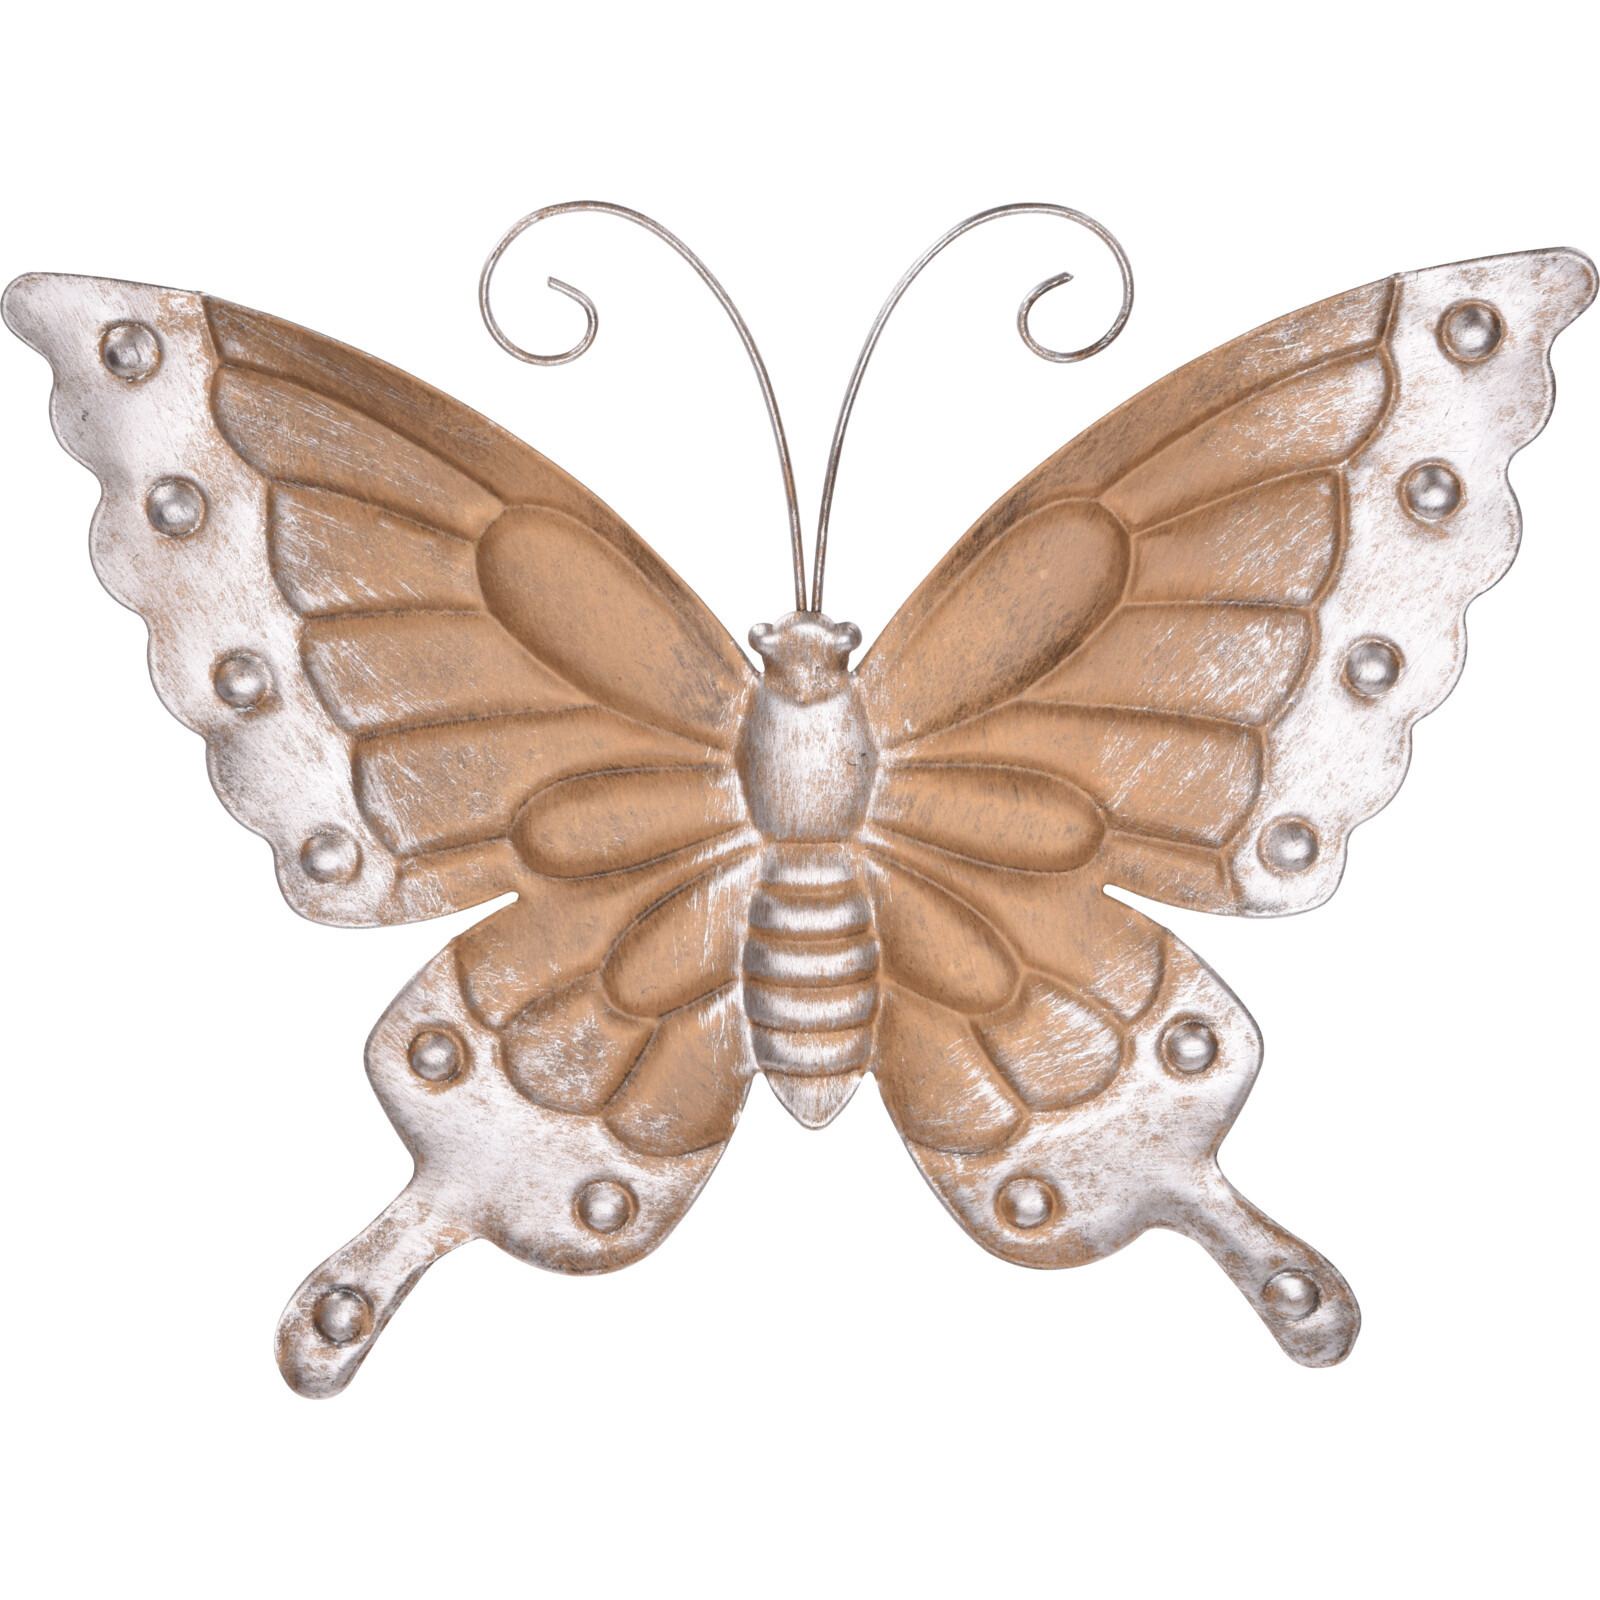 Tuin-wand decoratie vlinder lichtbruin metaal 29 x 24 cm